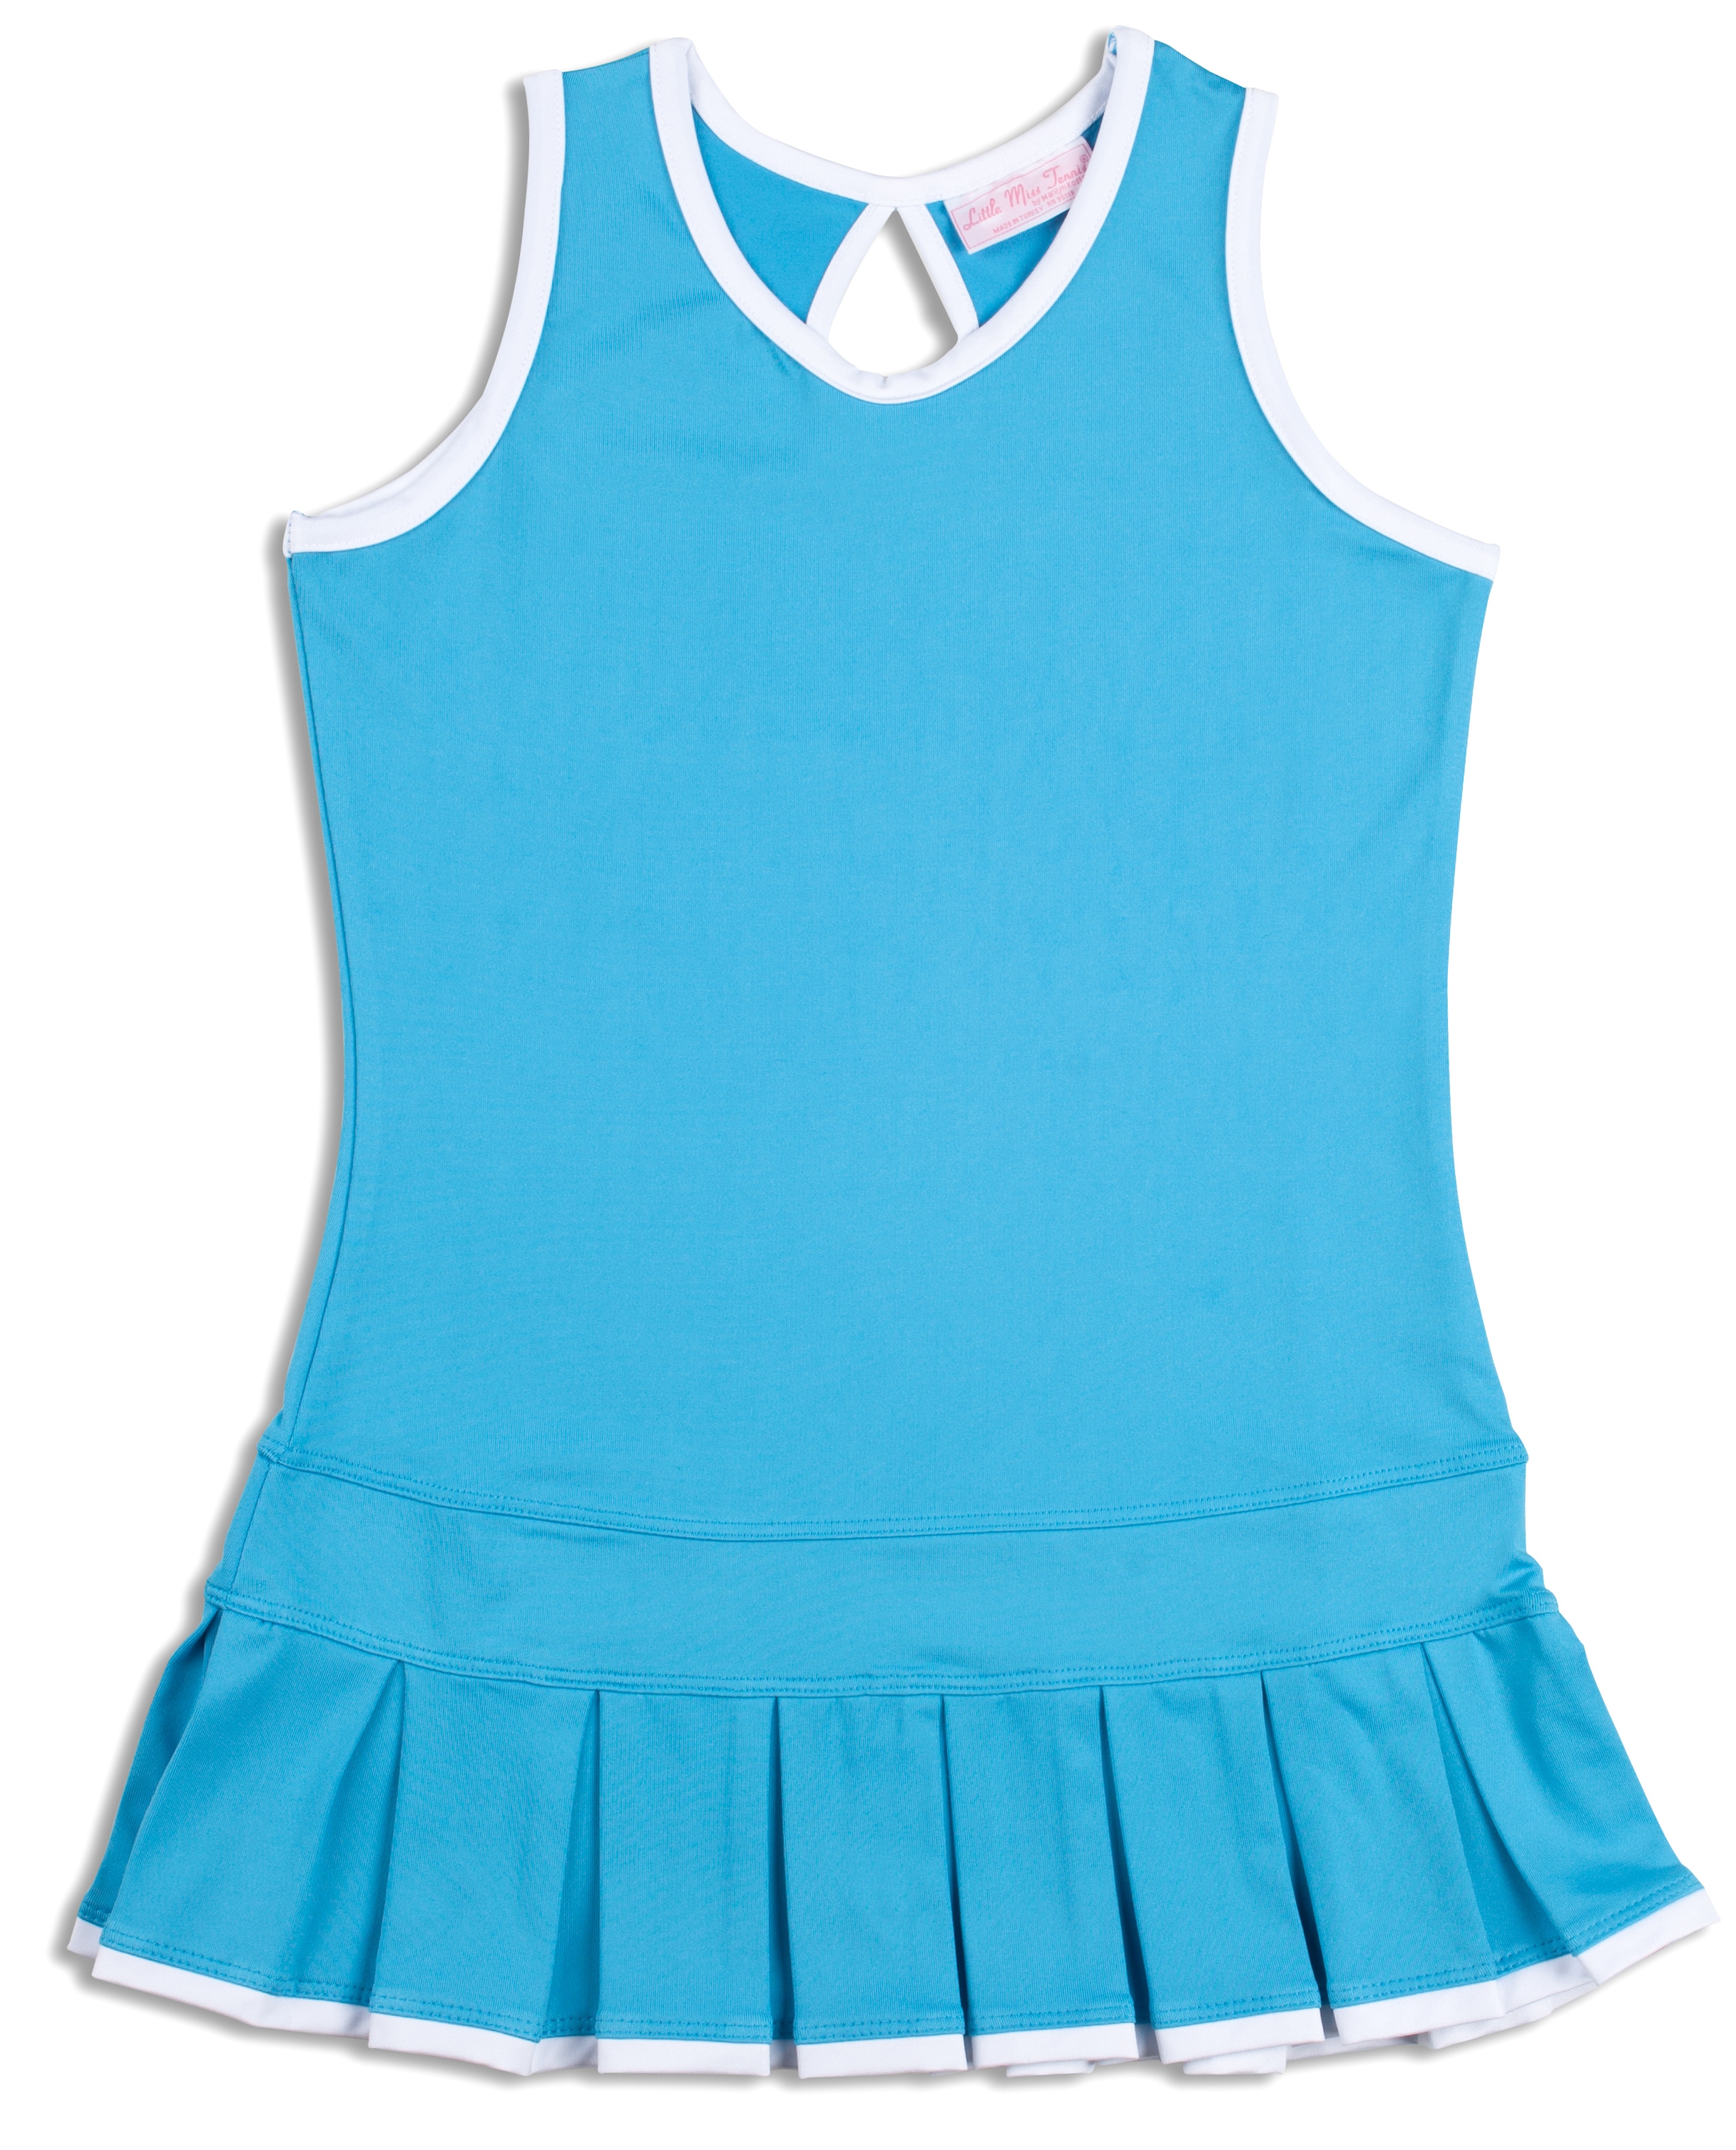 Girls Twilight Blue pleated tennis dress with white trim - mytenniskit ...